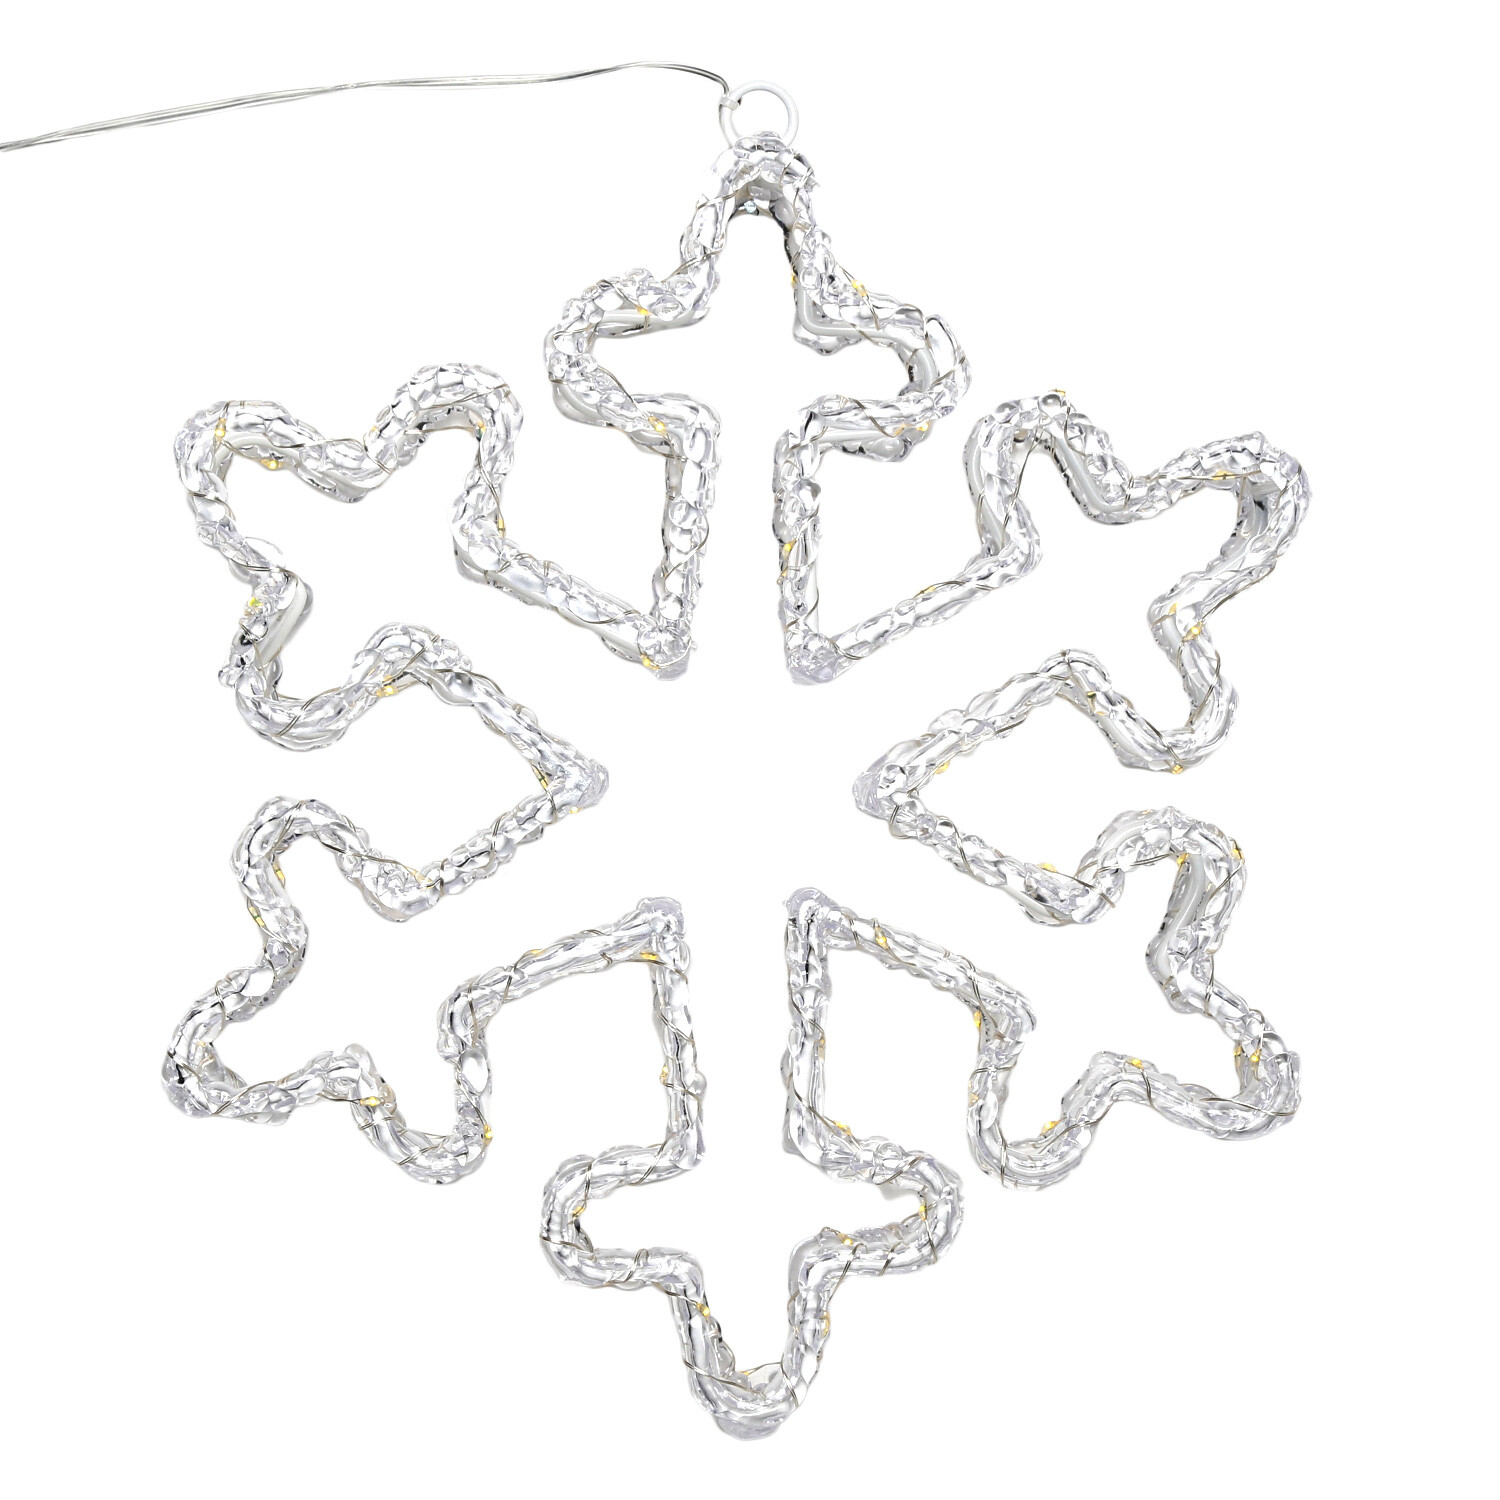 3D Acrylic Snowflake Light Image 1